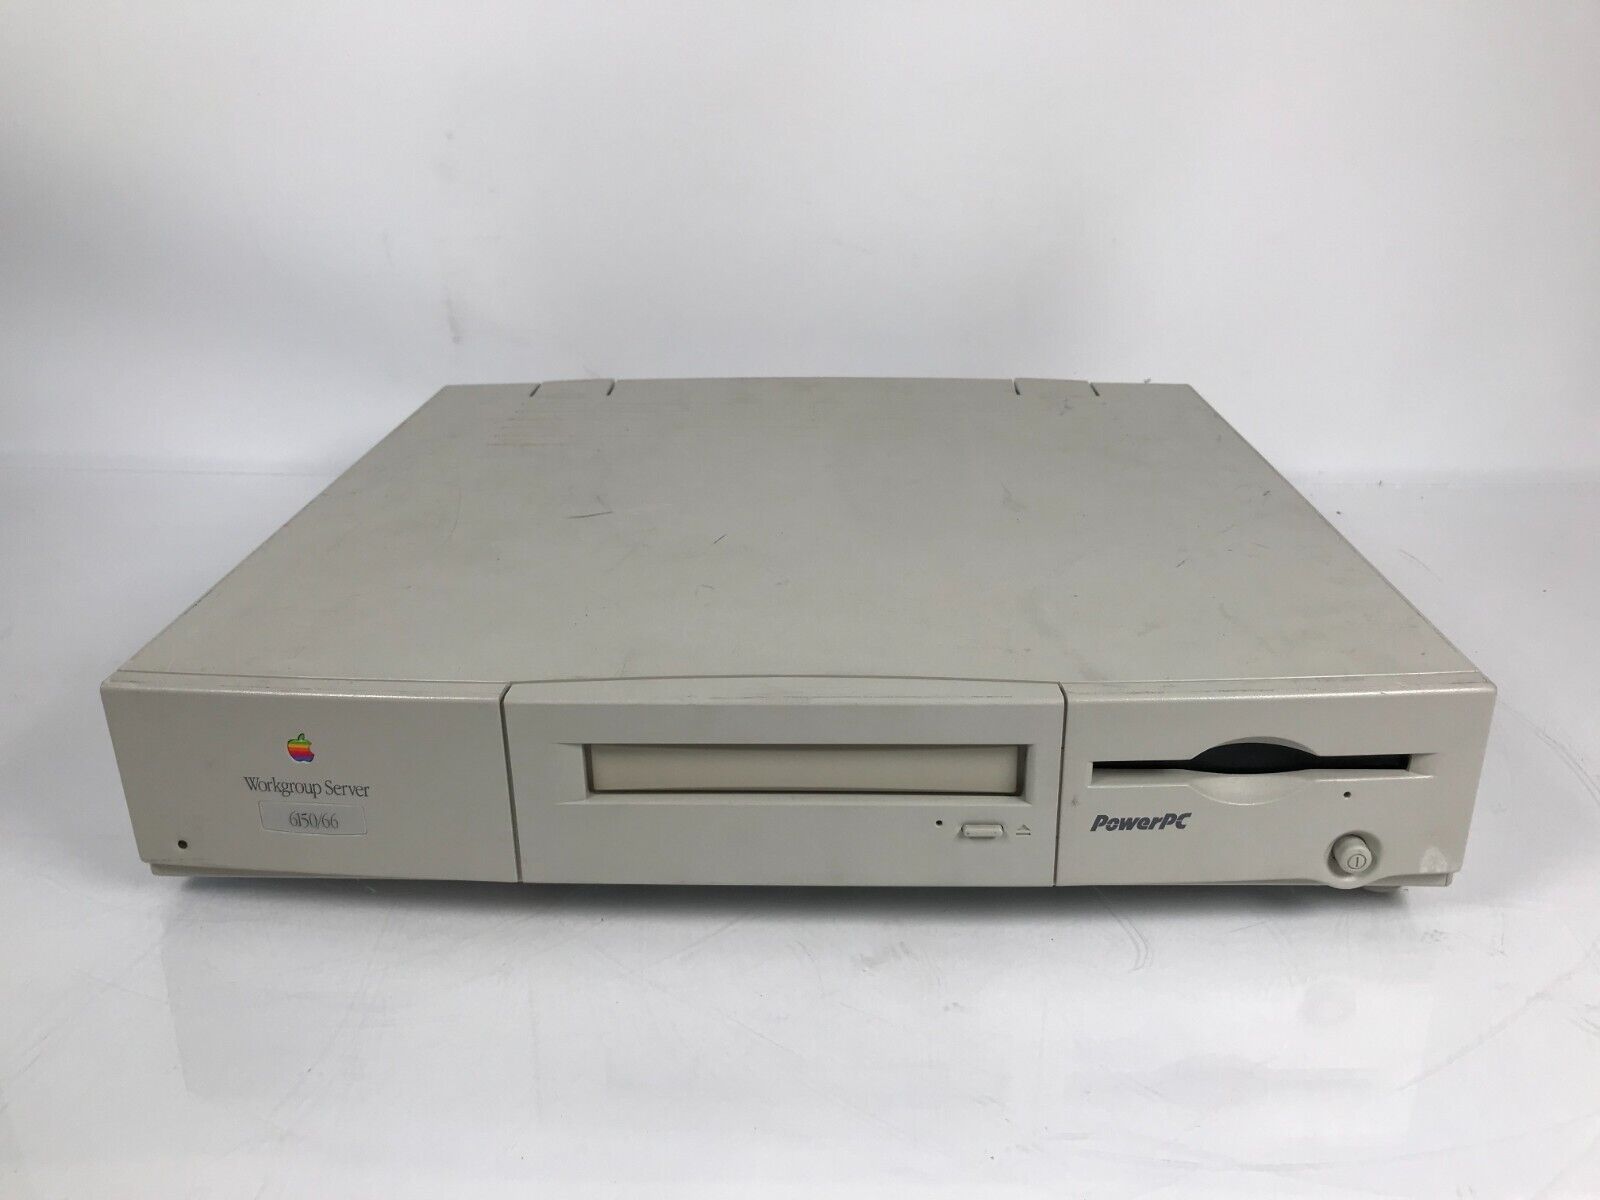 Vintage Apple Power Macintosh Workgroup Server 6150/66 Computer M1596 #2